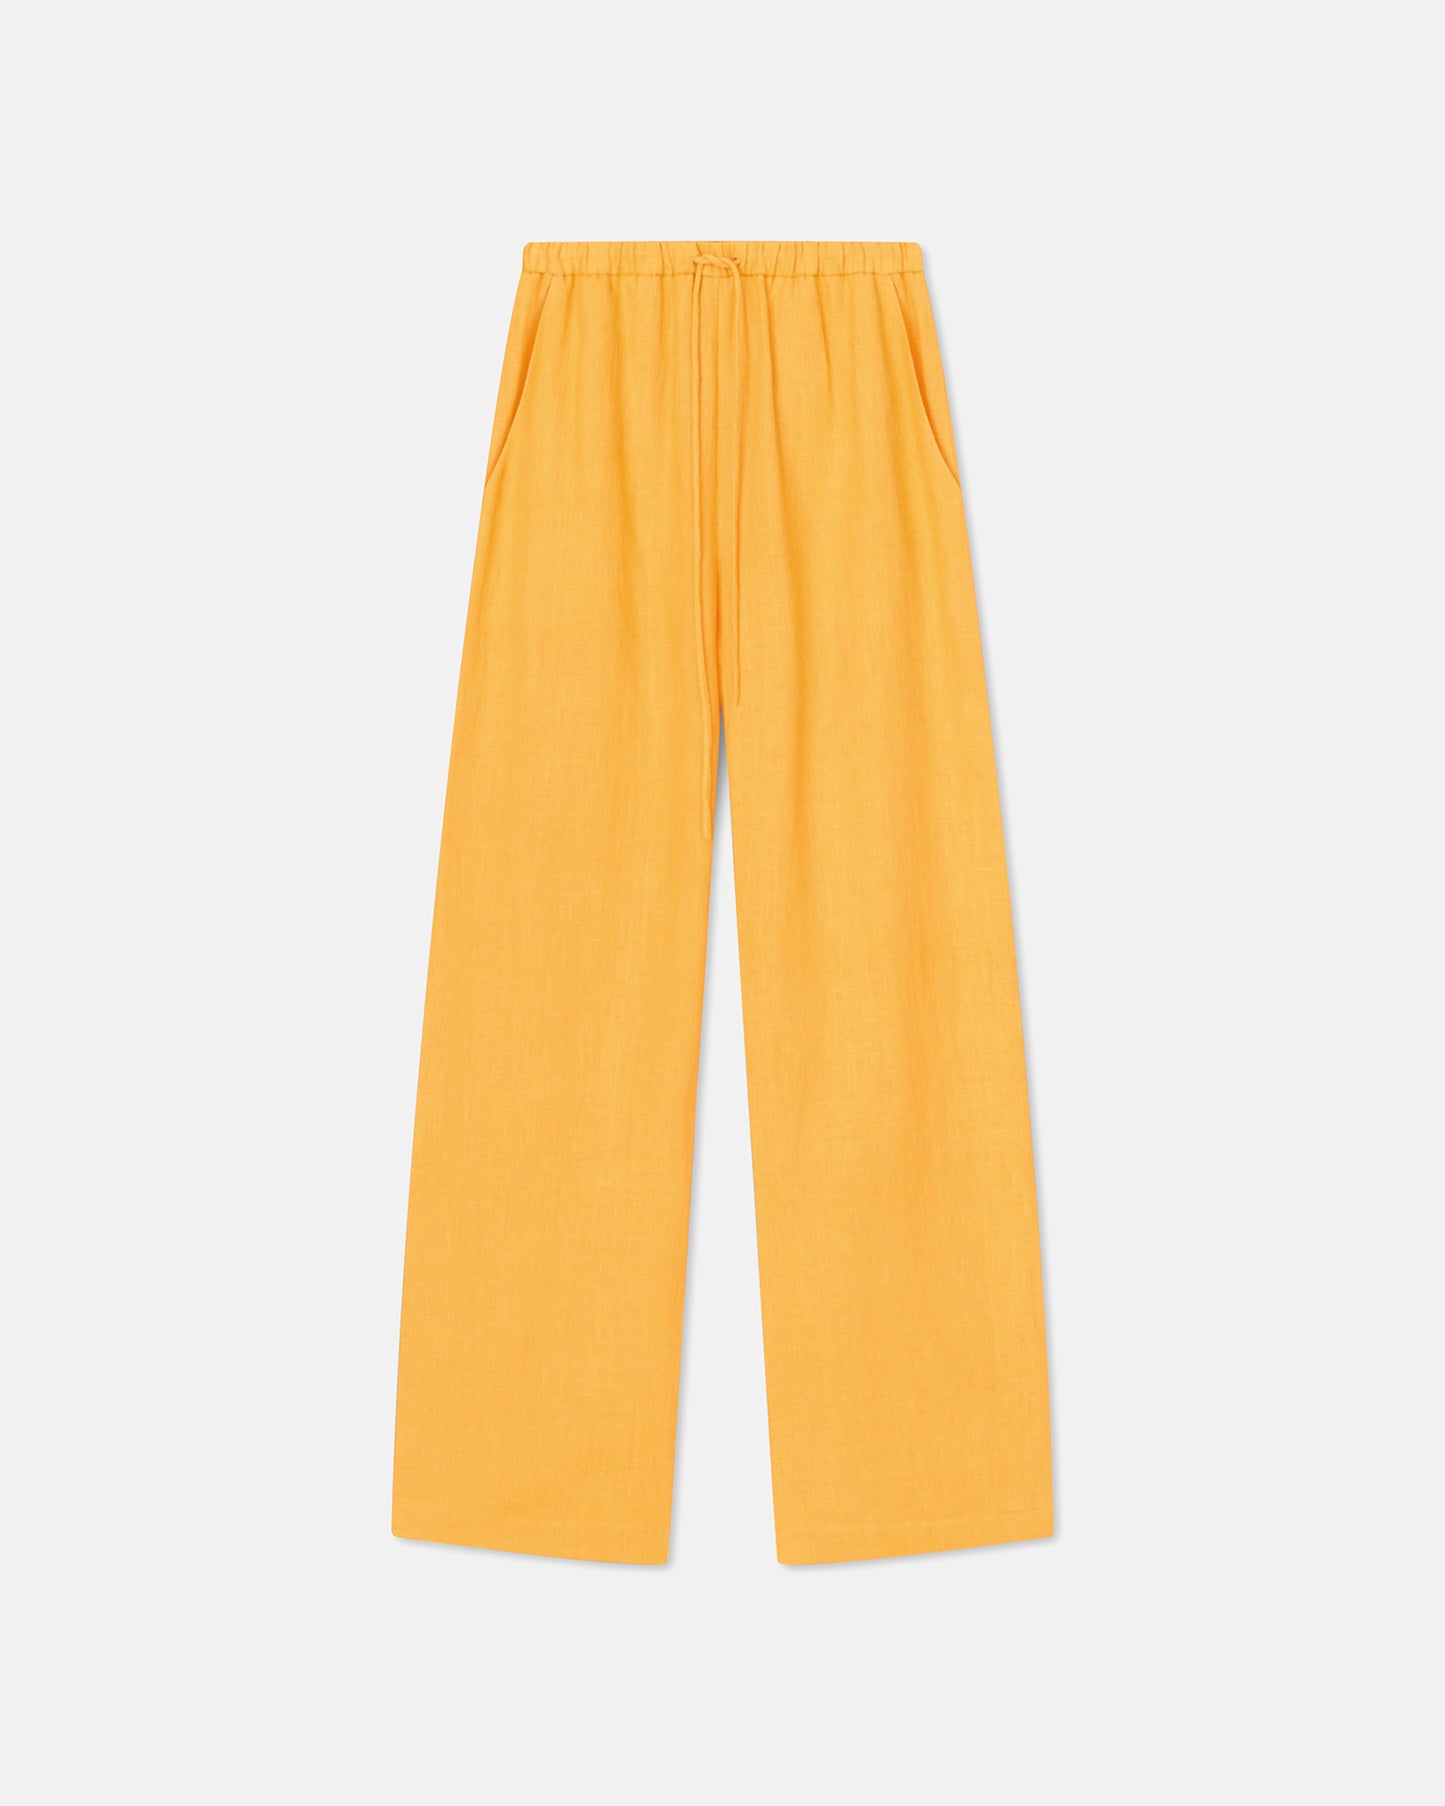 Polyka - Linen Pants - Orange Pf23